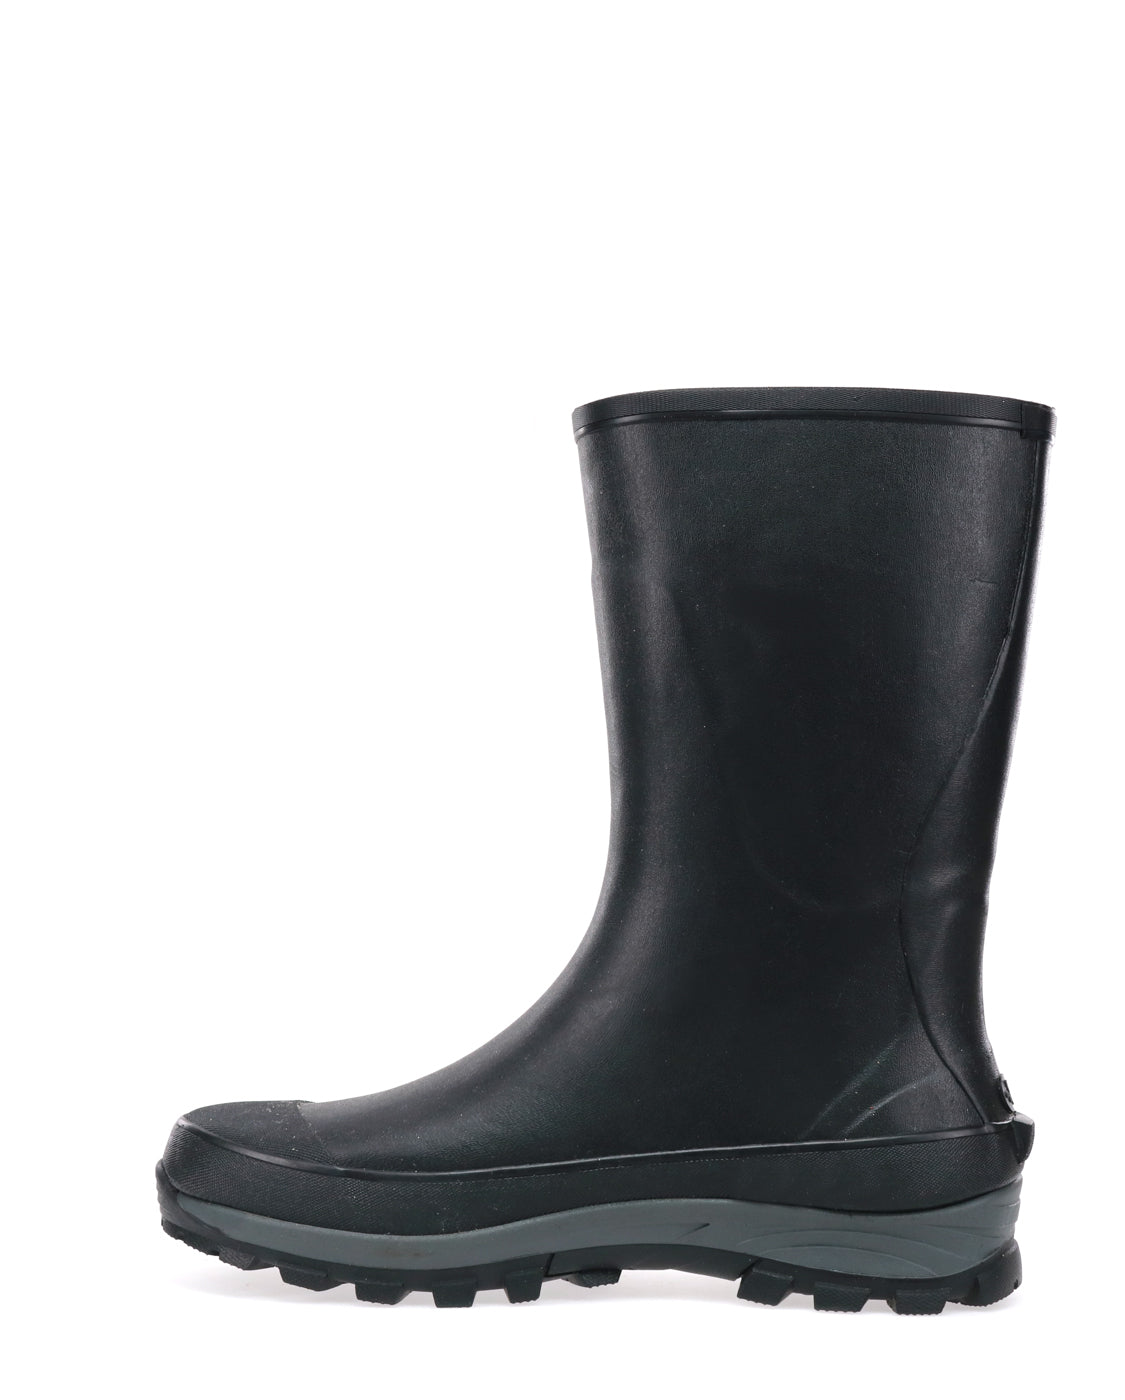 Men's Premium Rubber Tall Rain Boot - Black